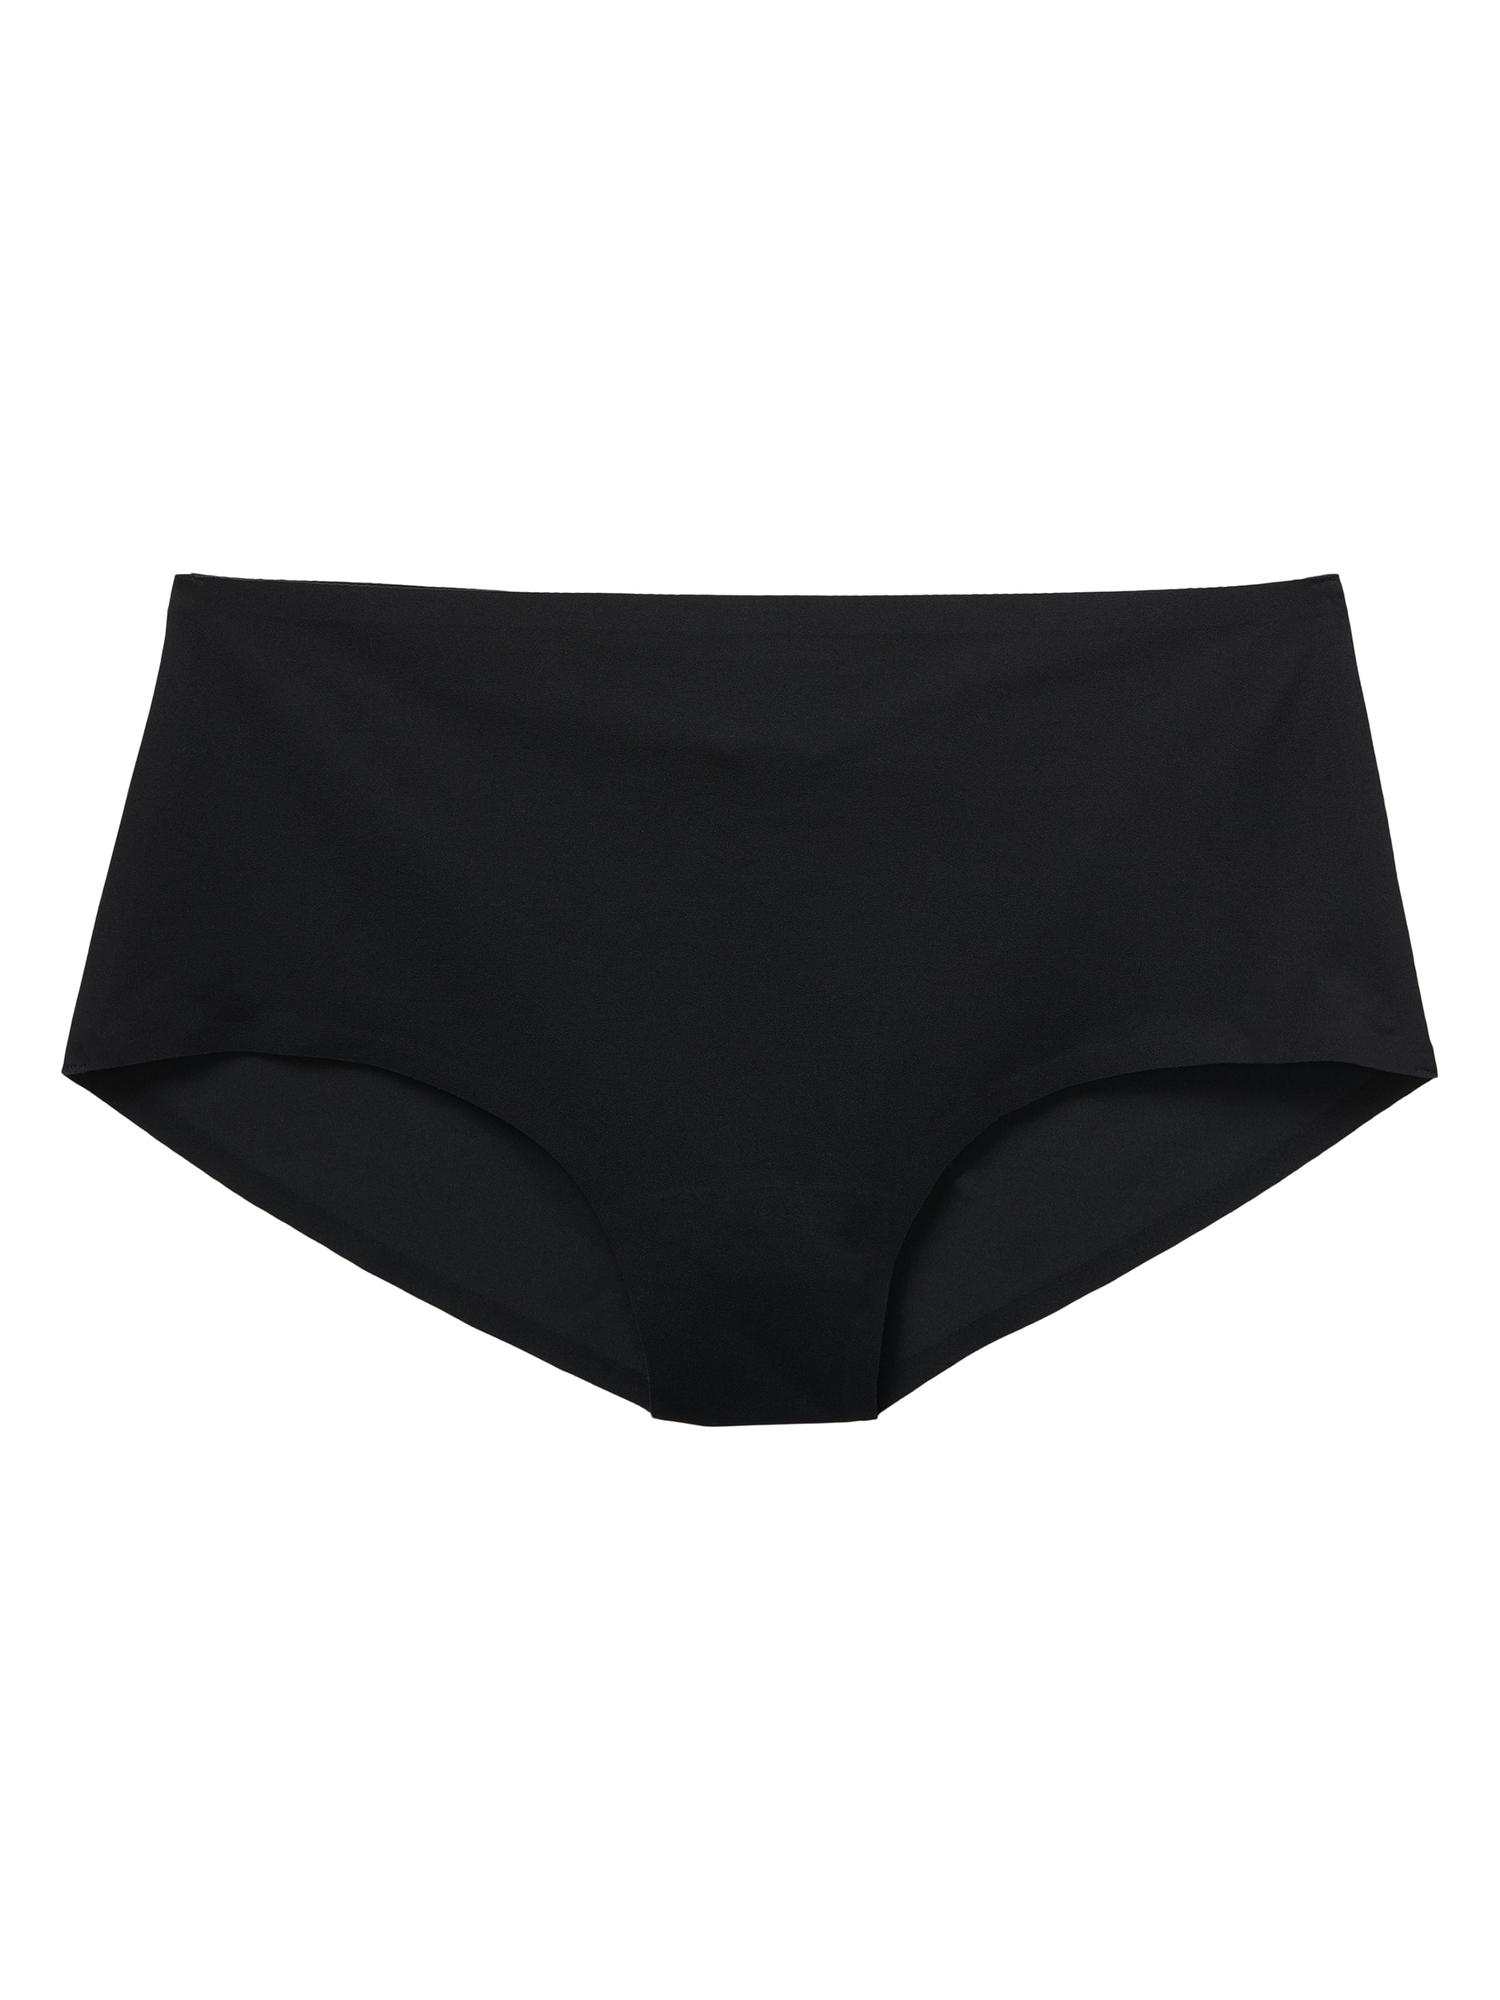 Athleta Ritual Boys'hort Underwear In Black